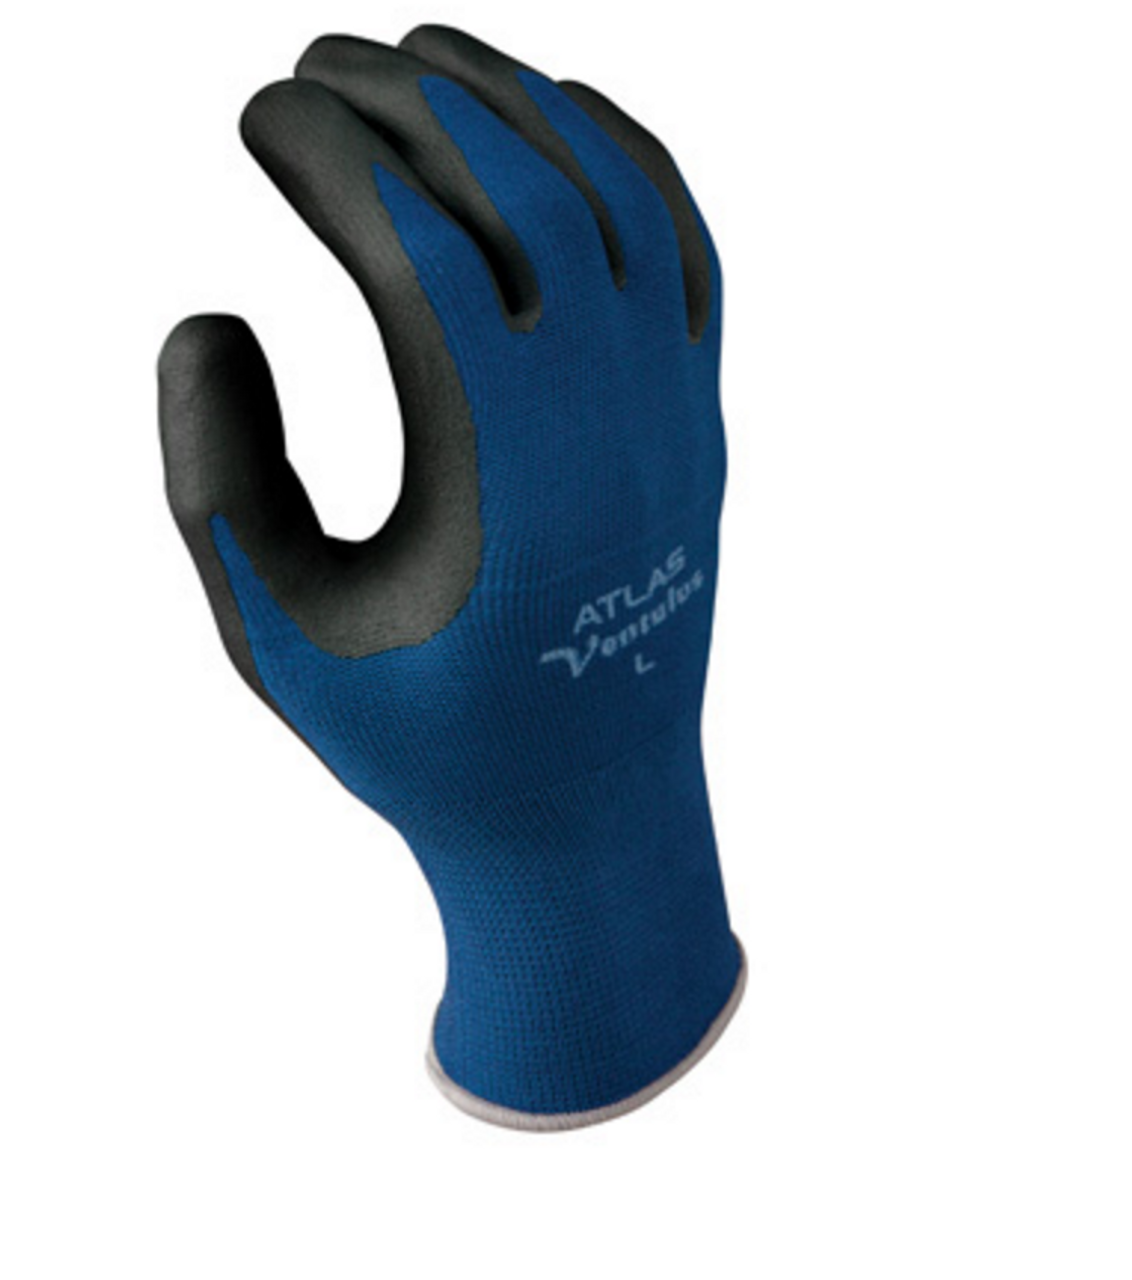 atlas safety gloves